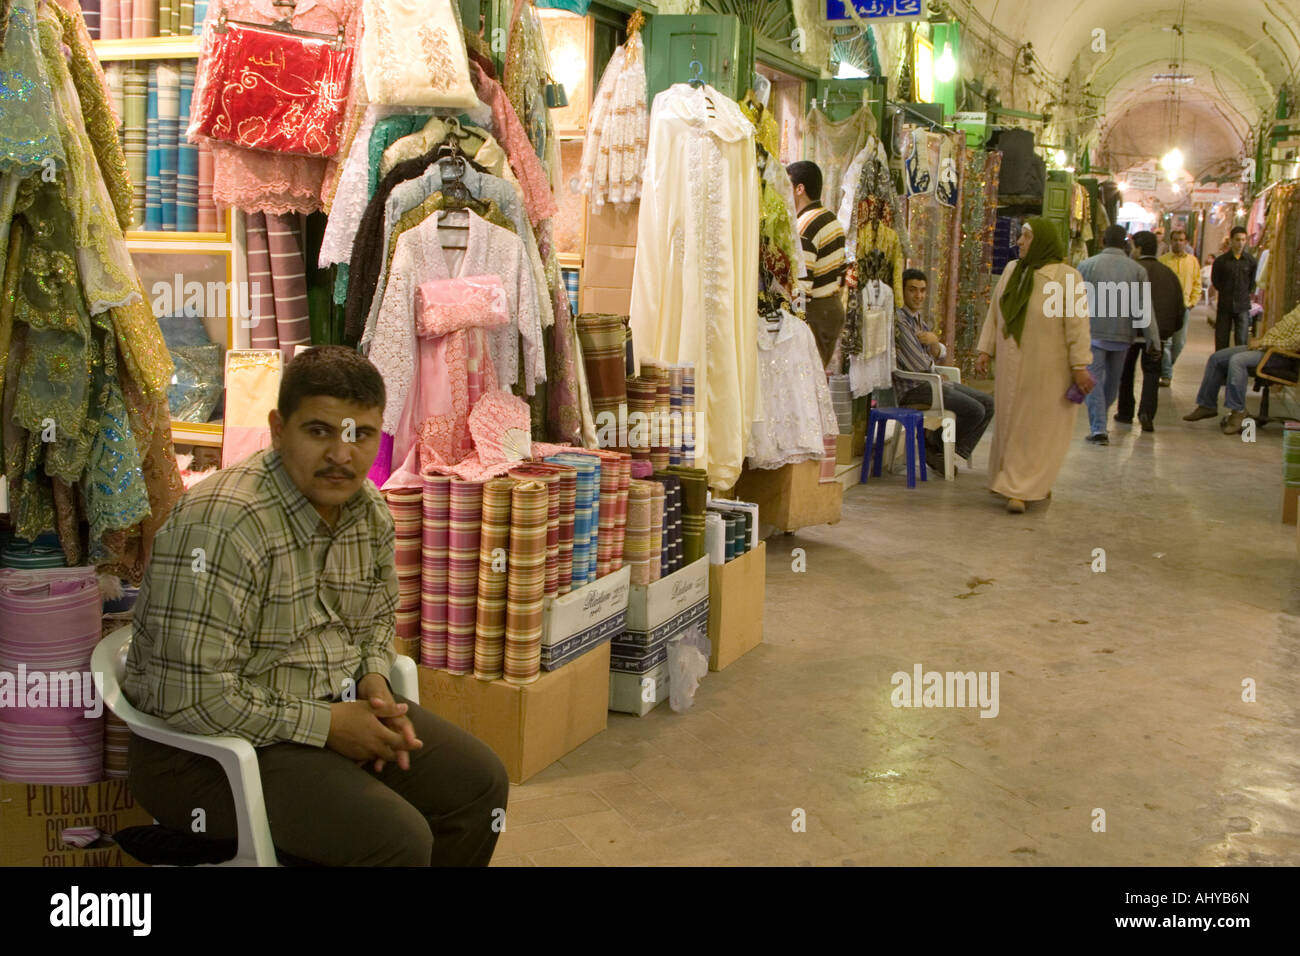 Tripoli, Libya. Street Scene in the Medina (Old City) Market (Suq), Women's Clothing and Textiles Section Stock Photo